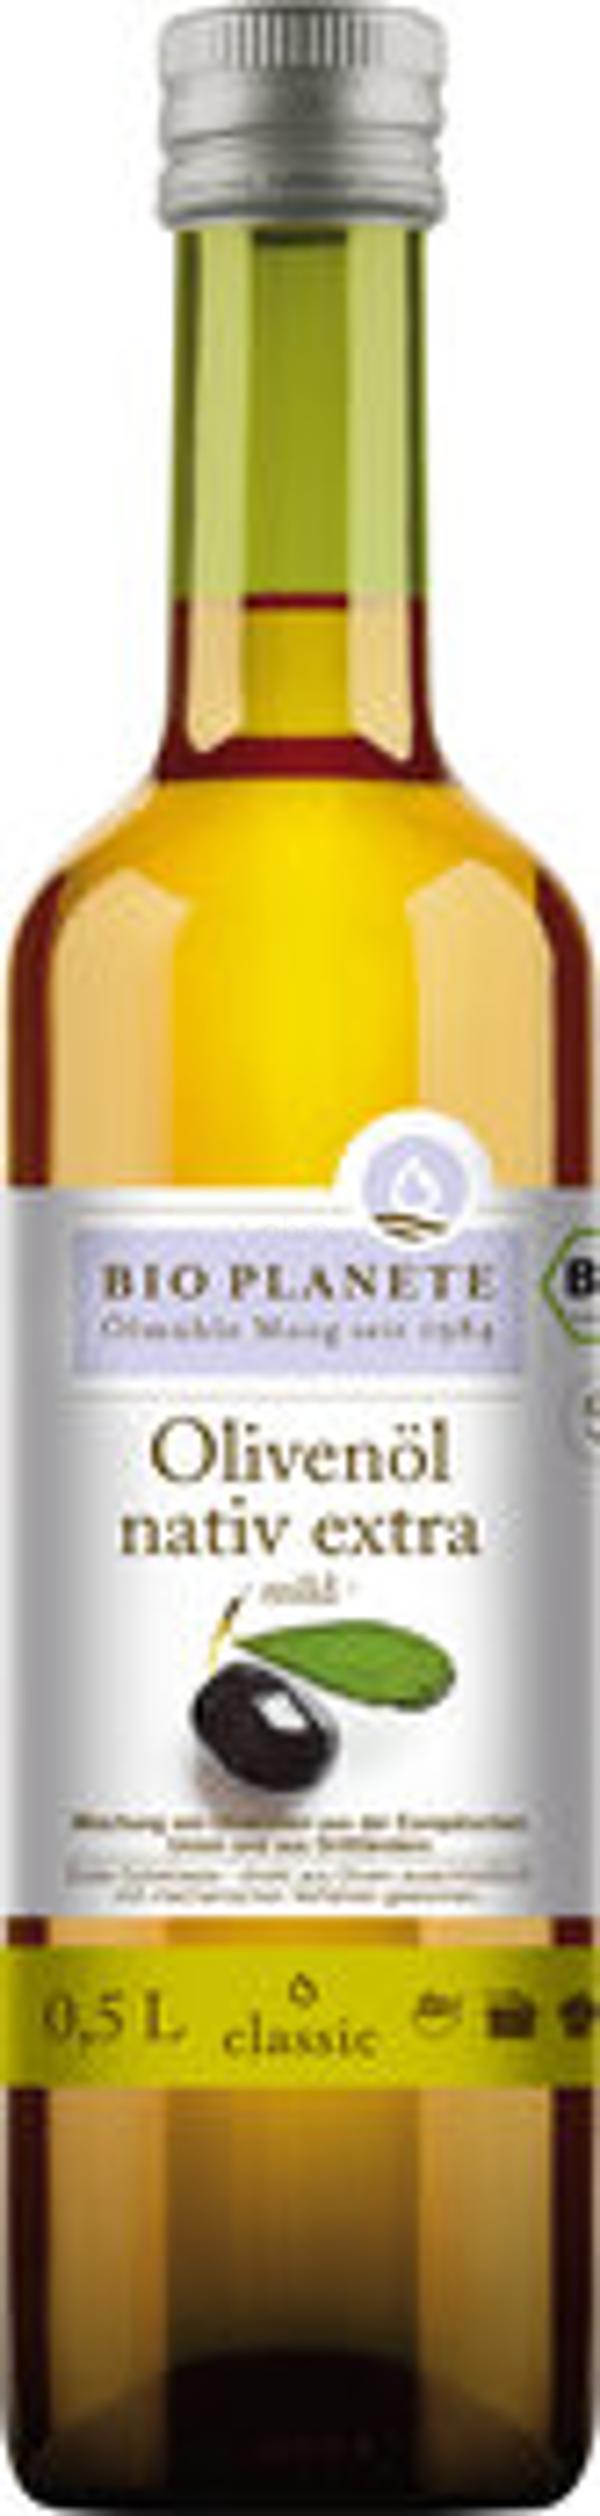 Produktfoto zu Olivenöl mild nativ extra 500ml